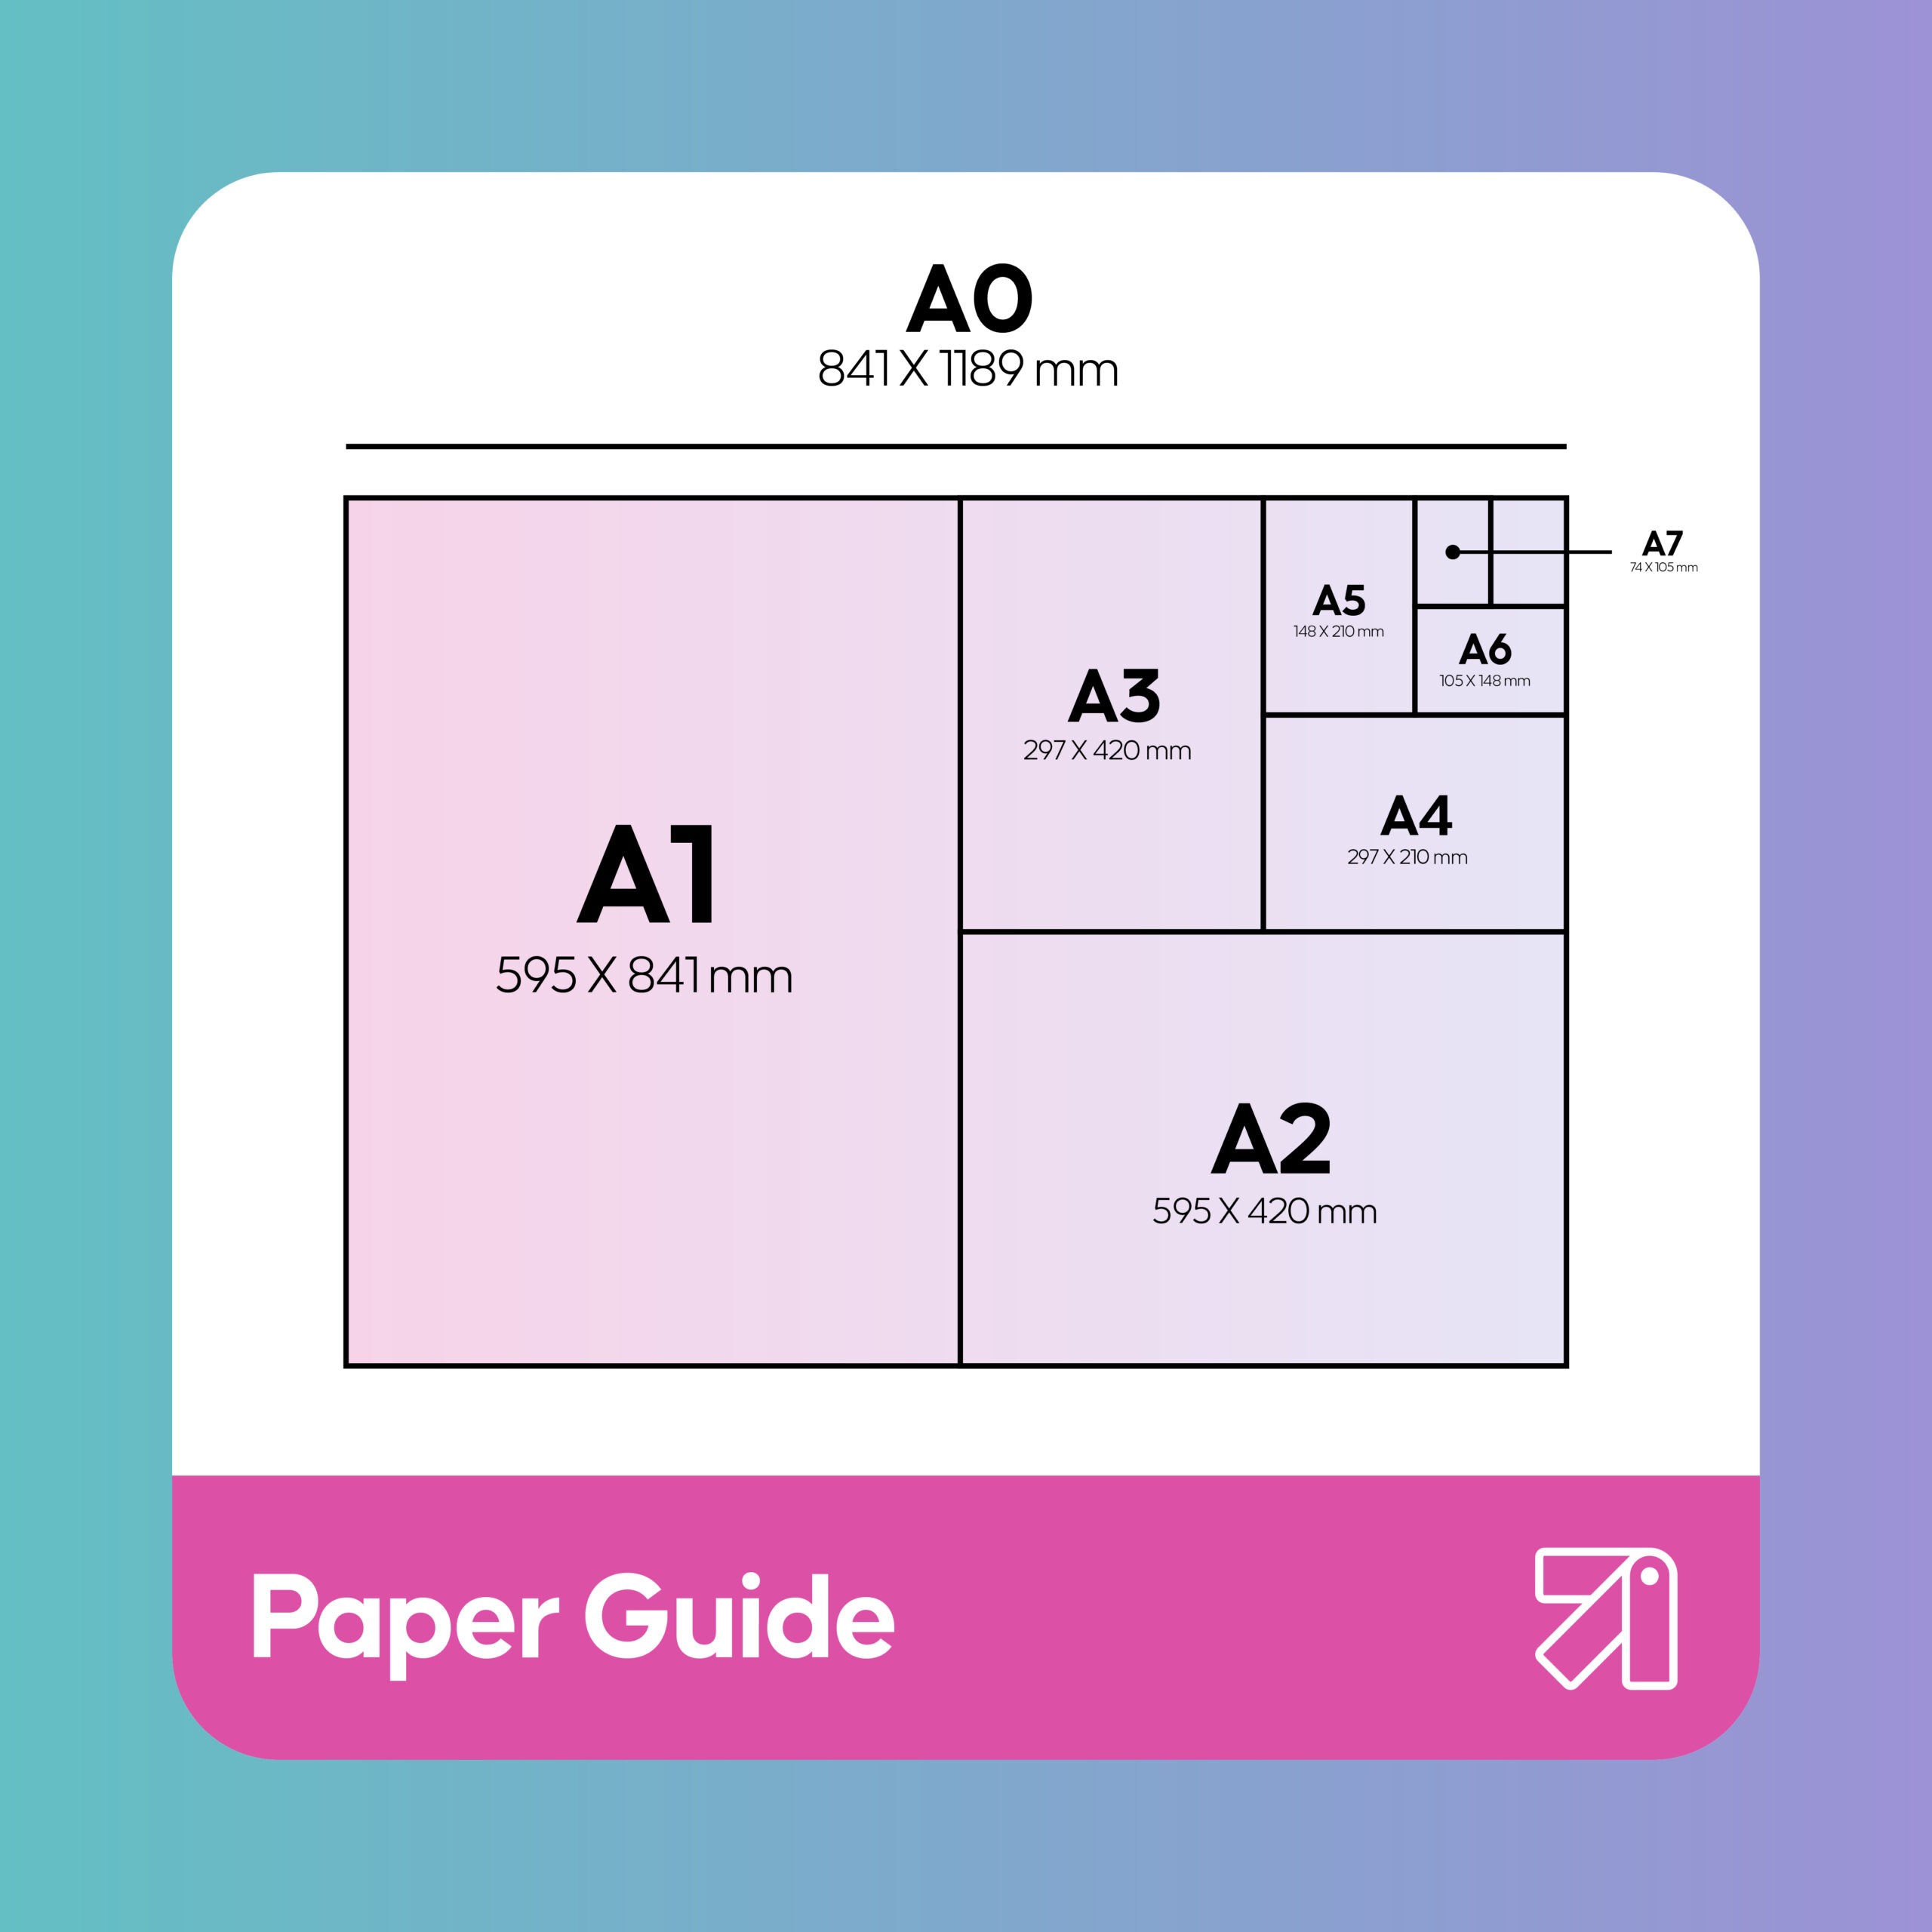 A3 paper size - A4 paper size